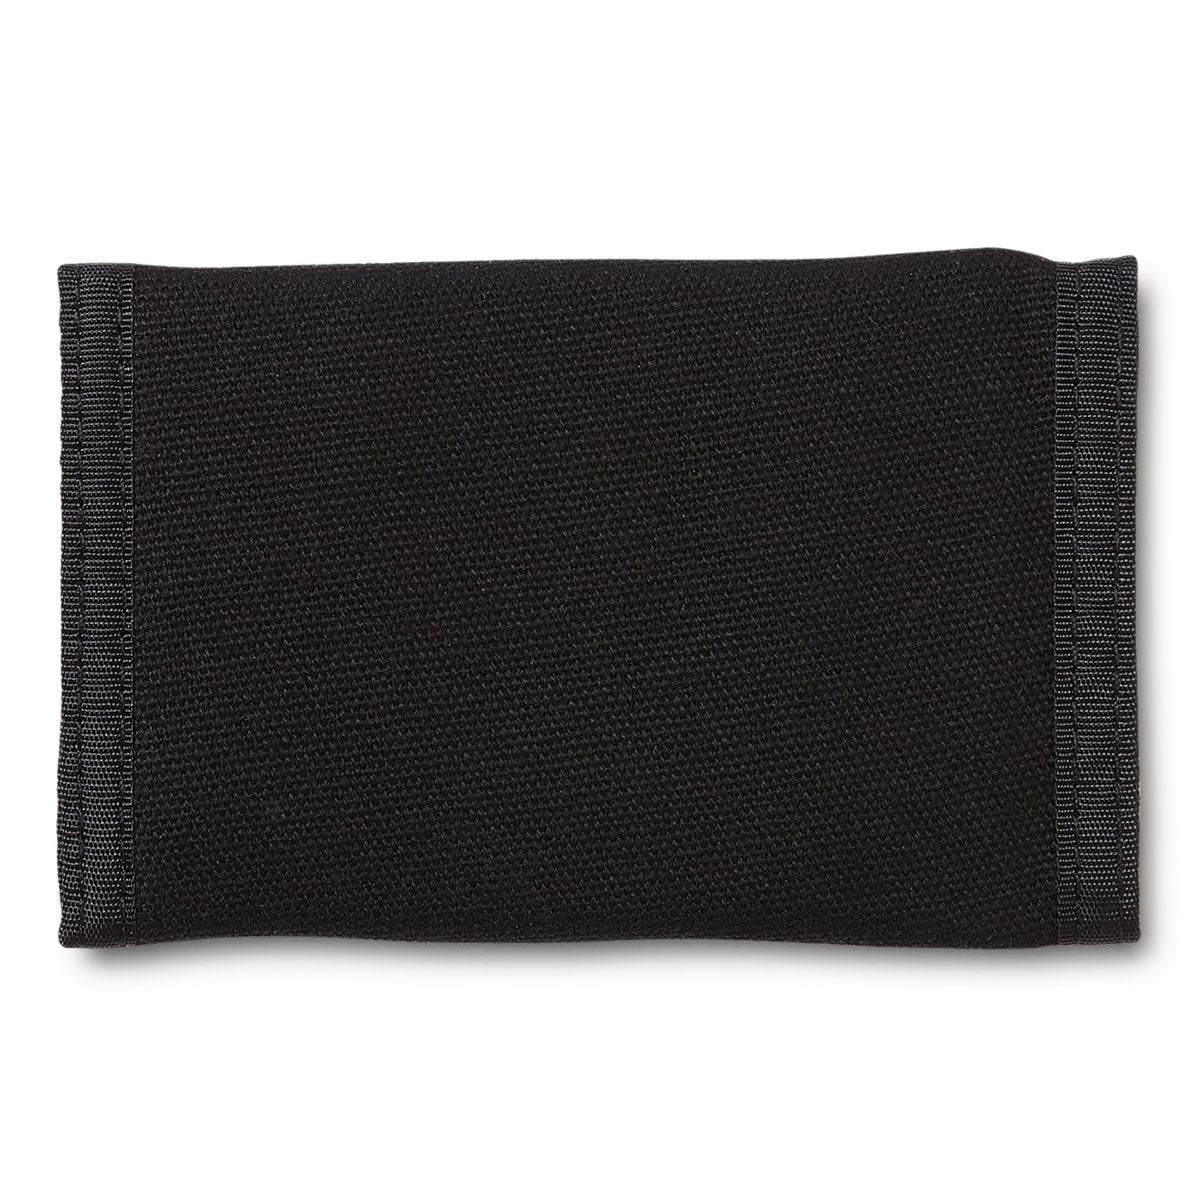 Volcom Box Stones Wallet - Black image 3